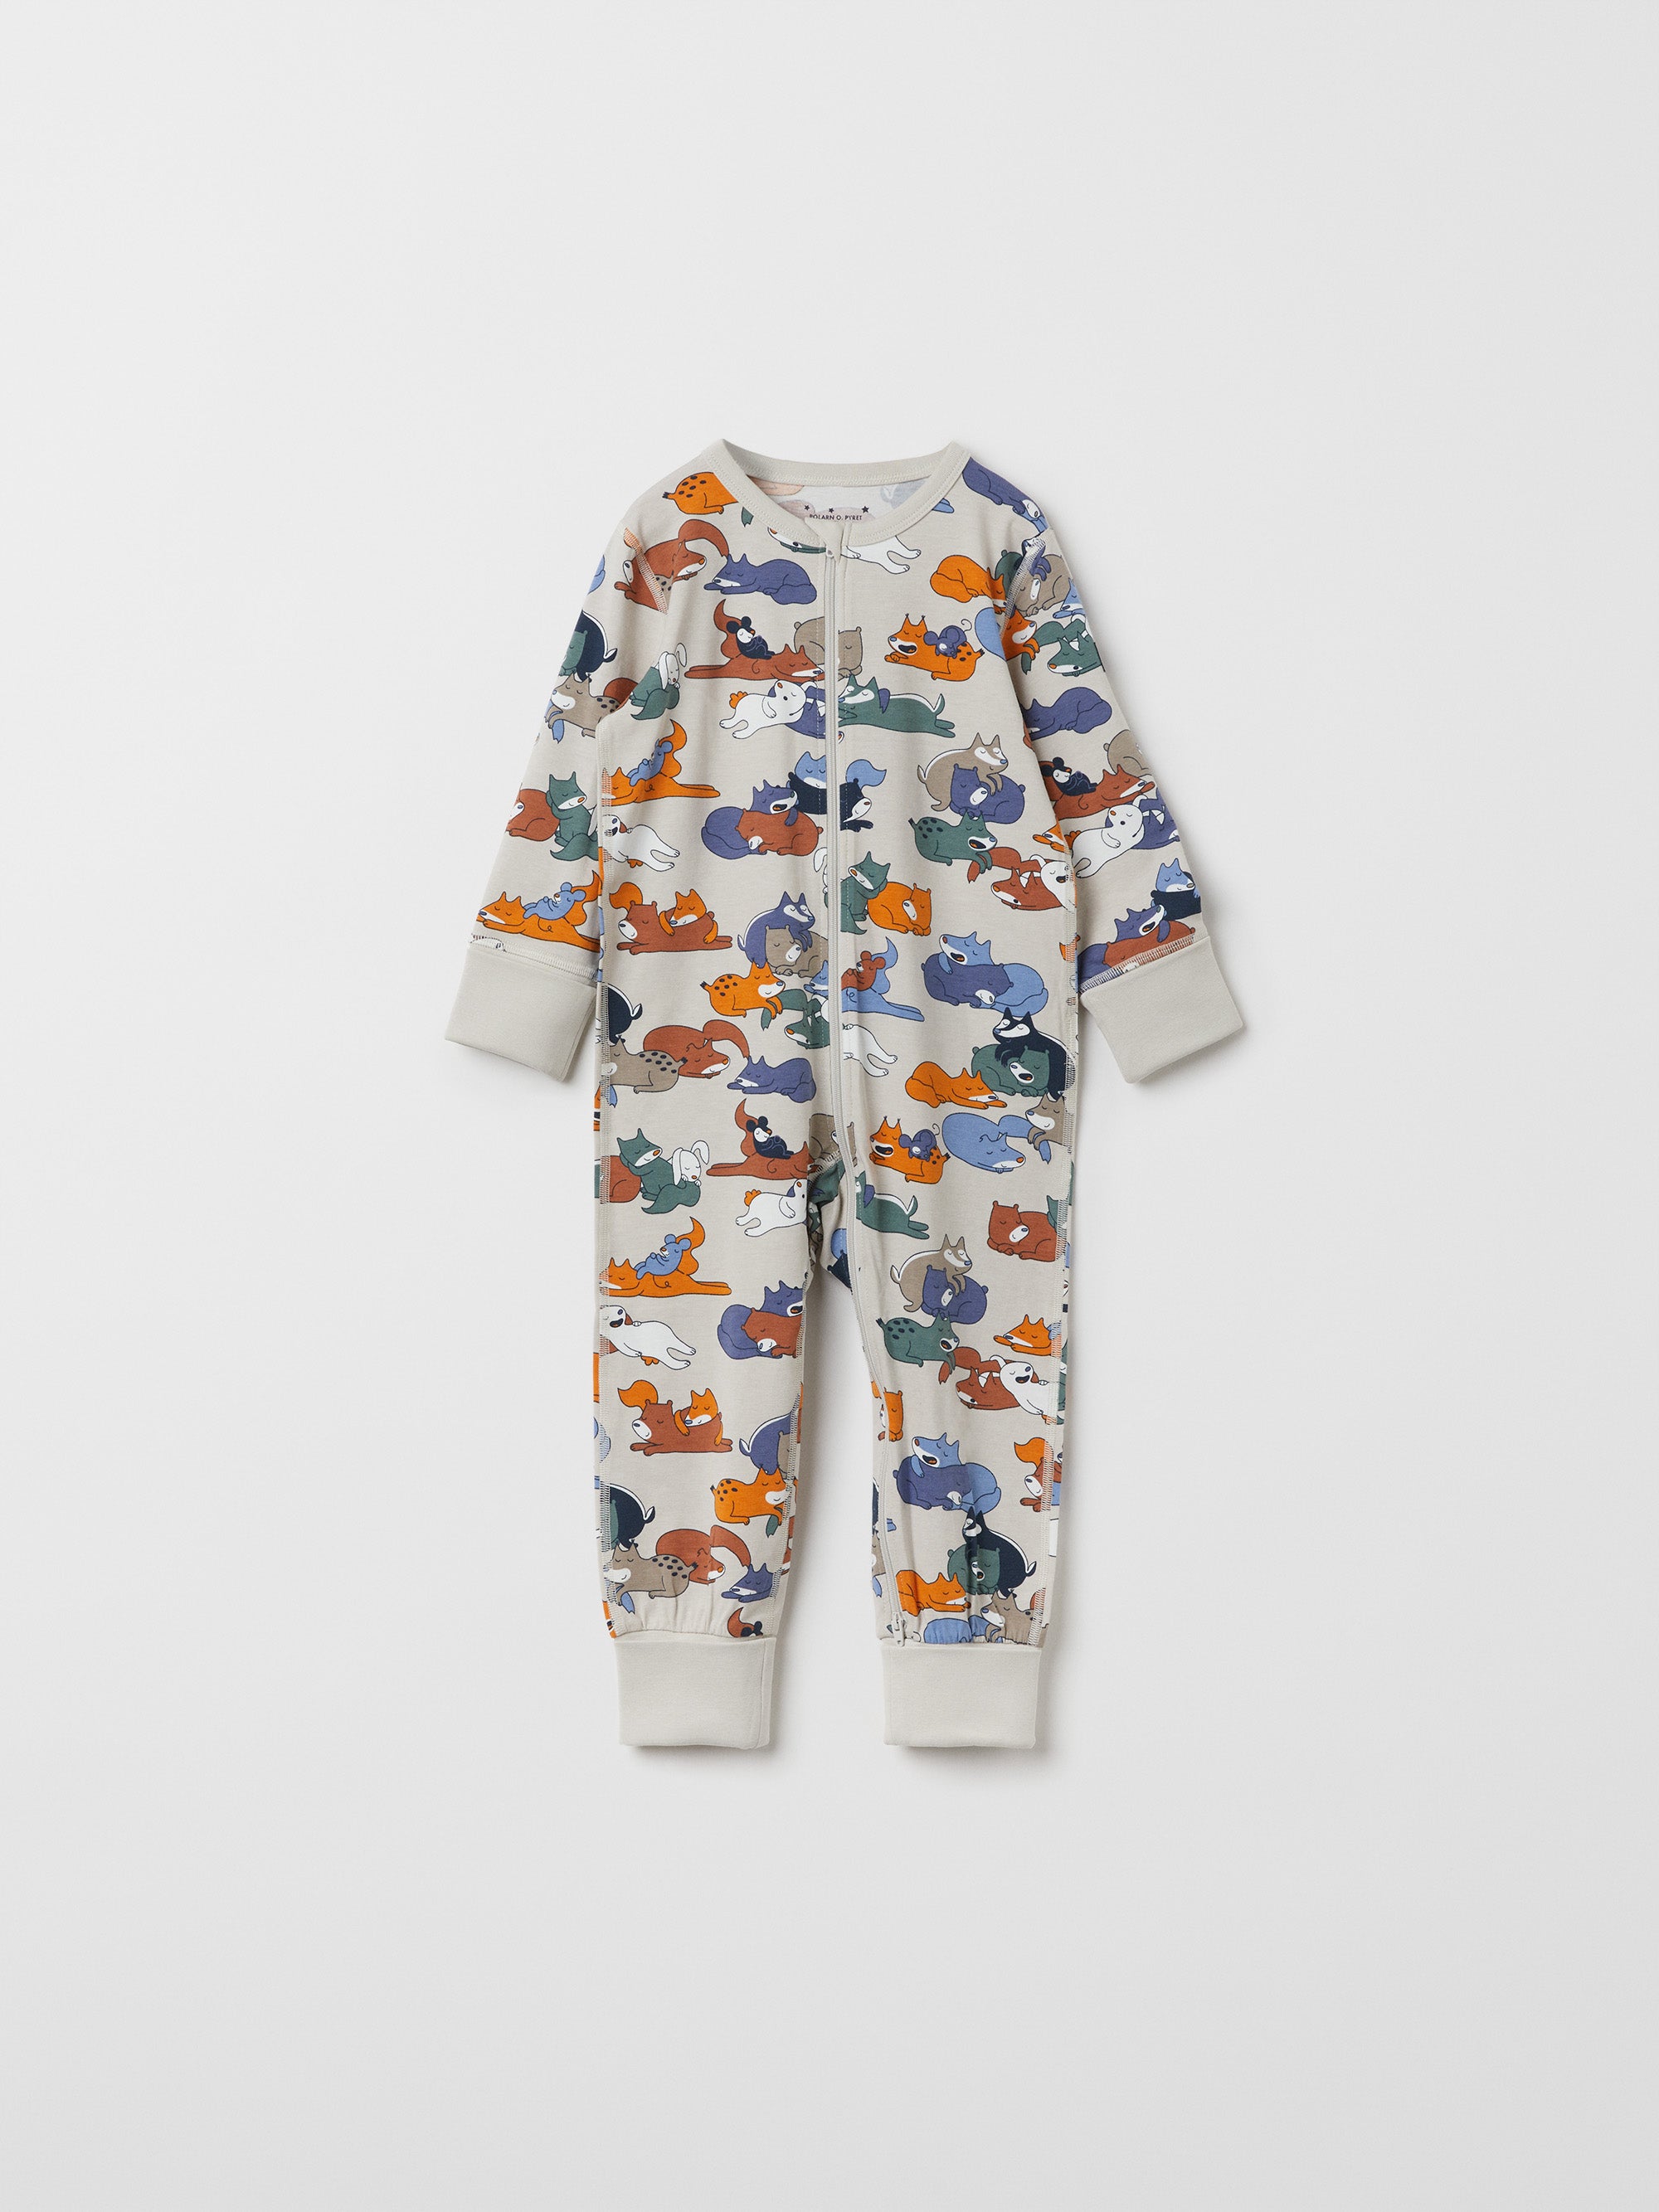 Animal Print Baby Sleepsuit